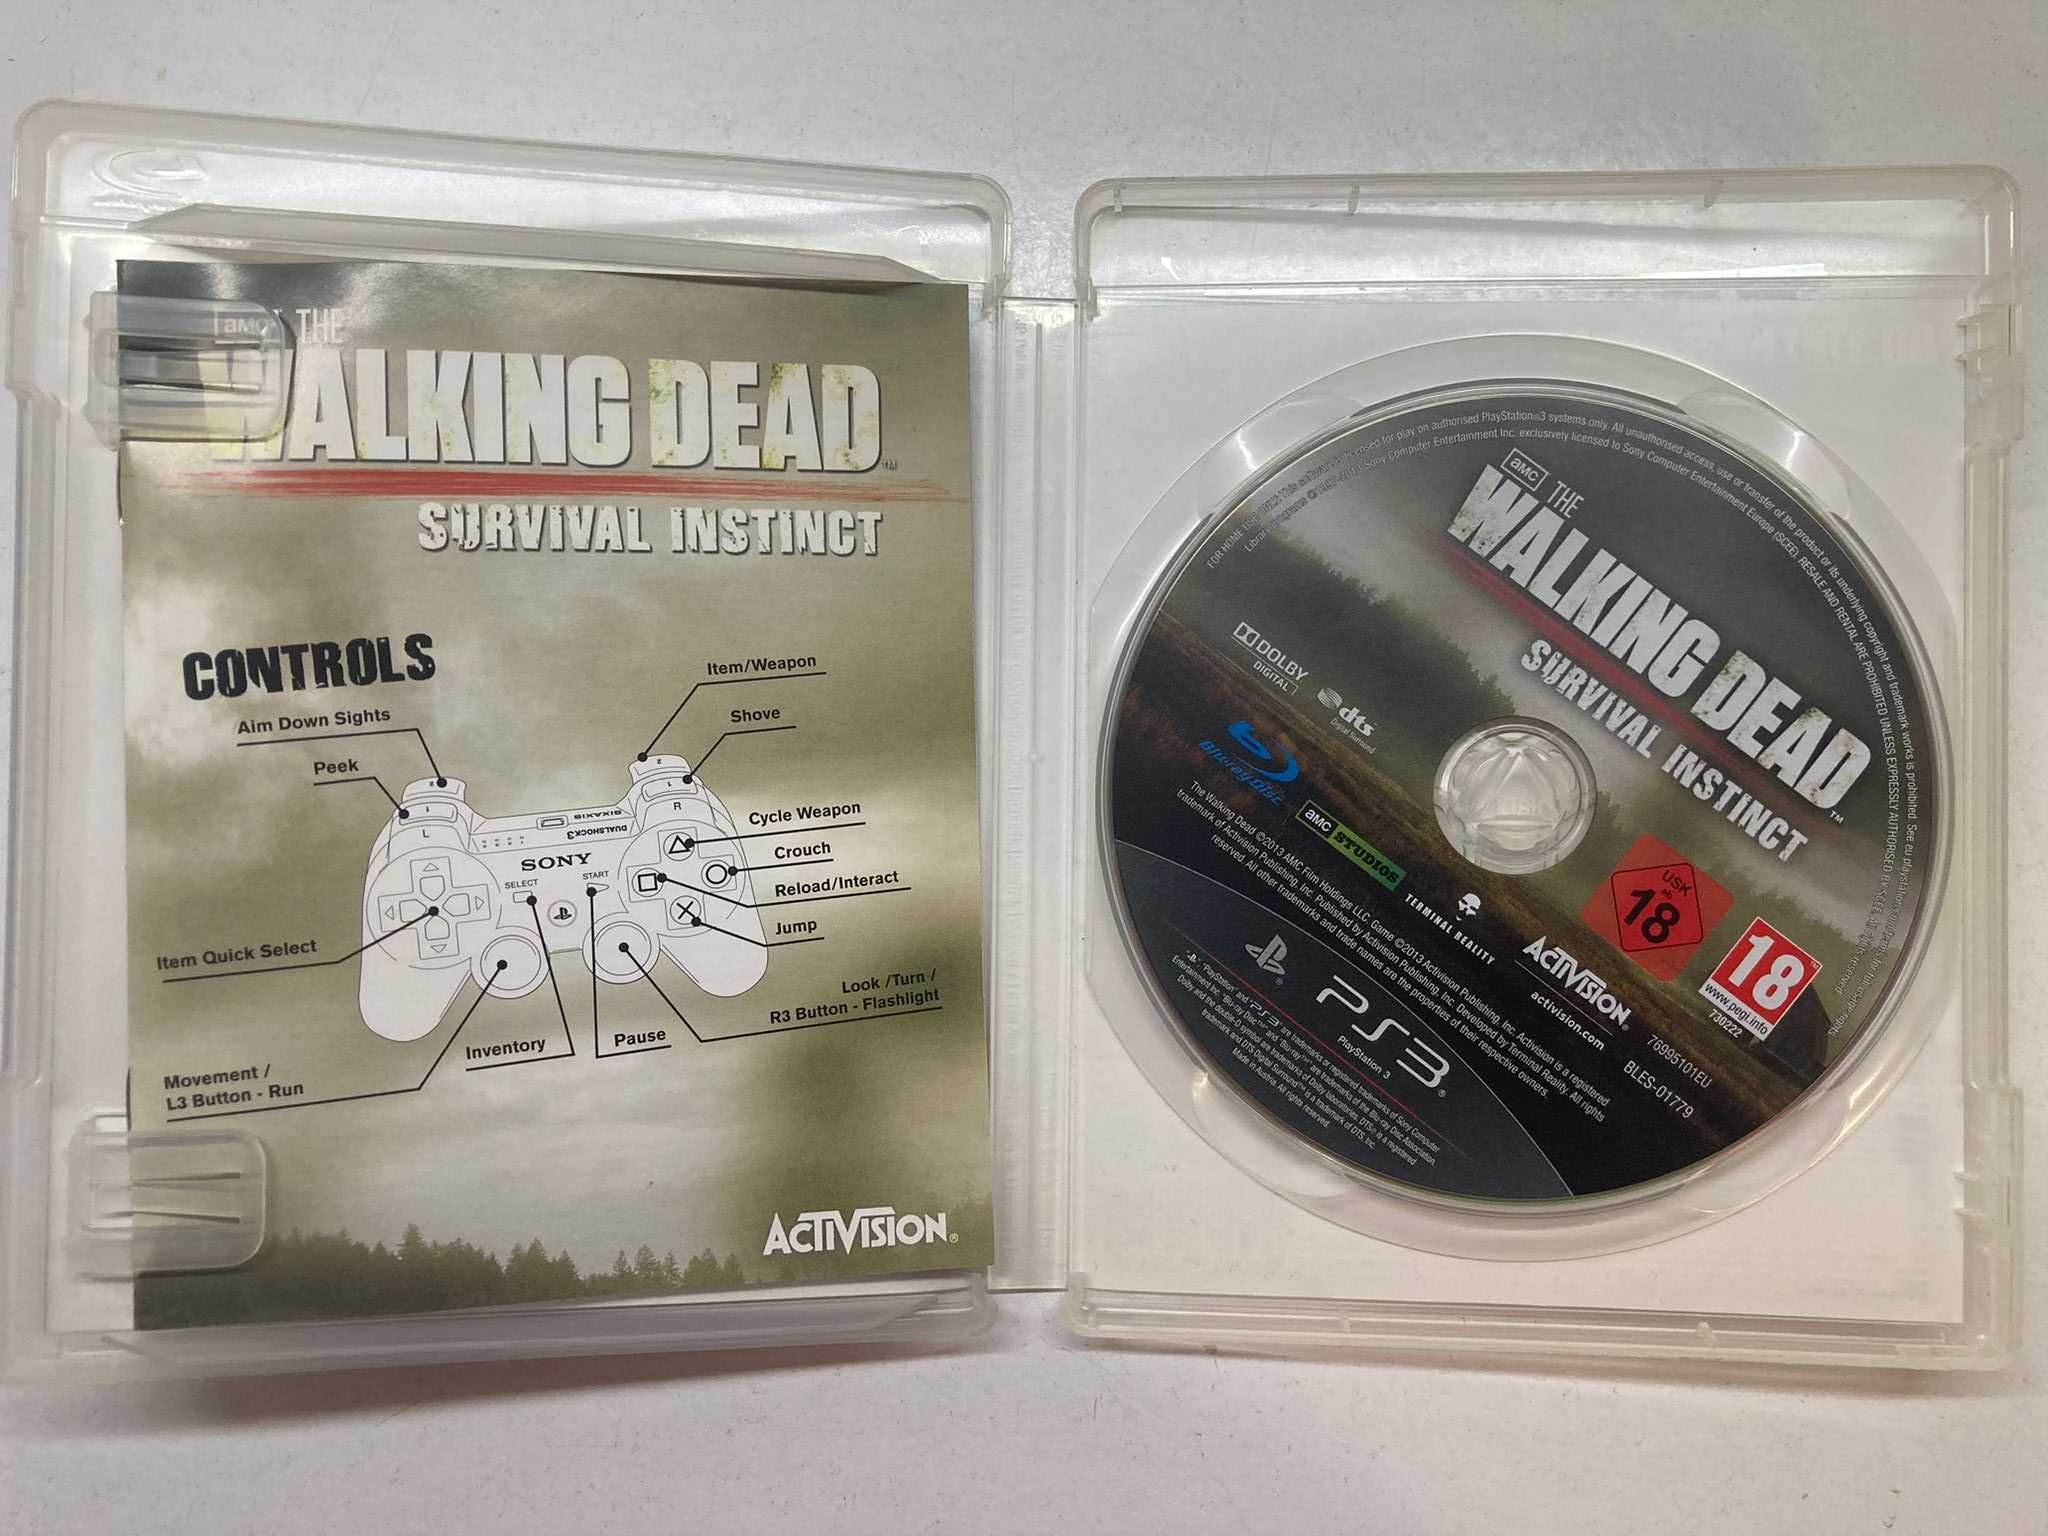 PS3 - The Walking Dead: Survival Instinct